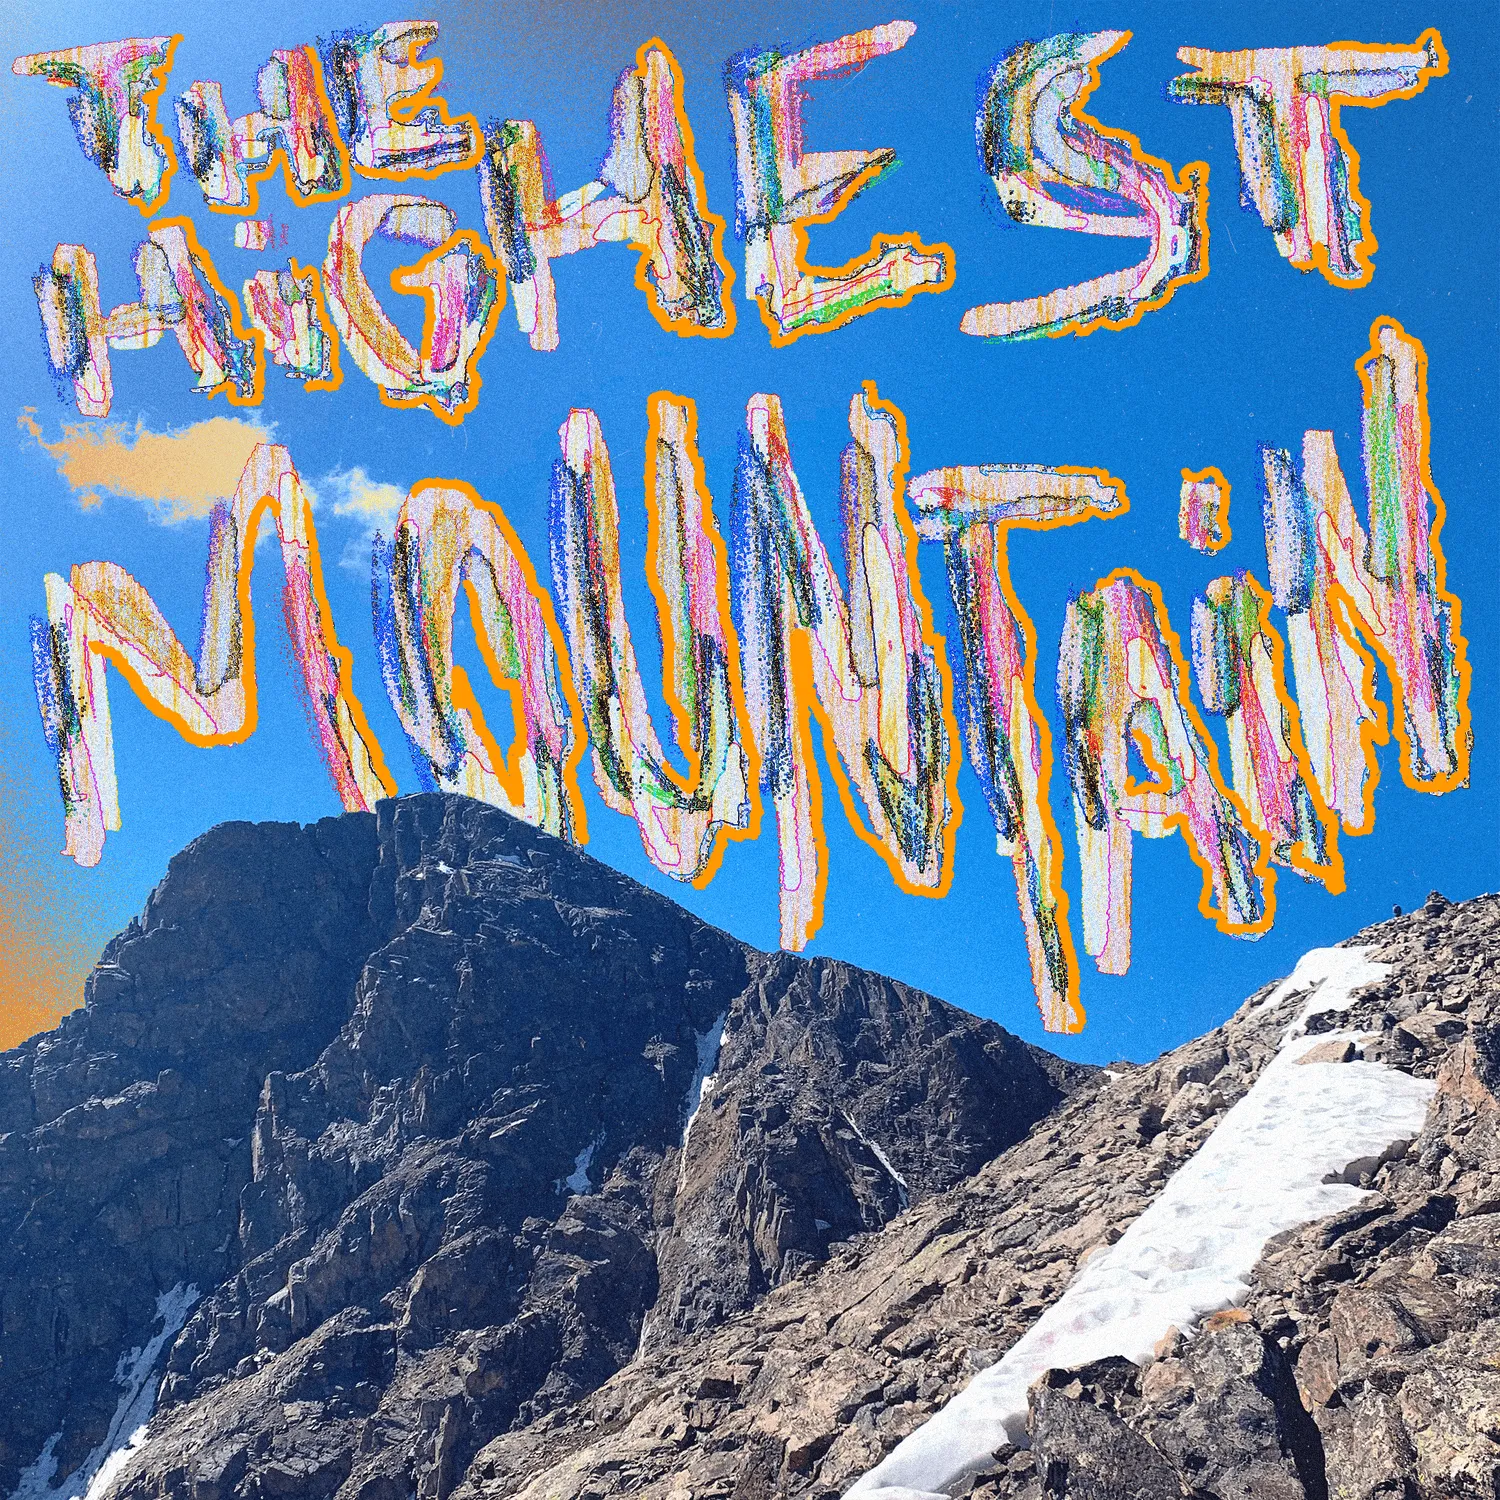 The highest mountain